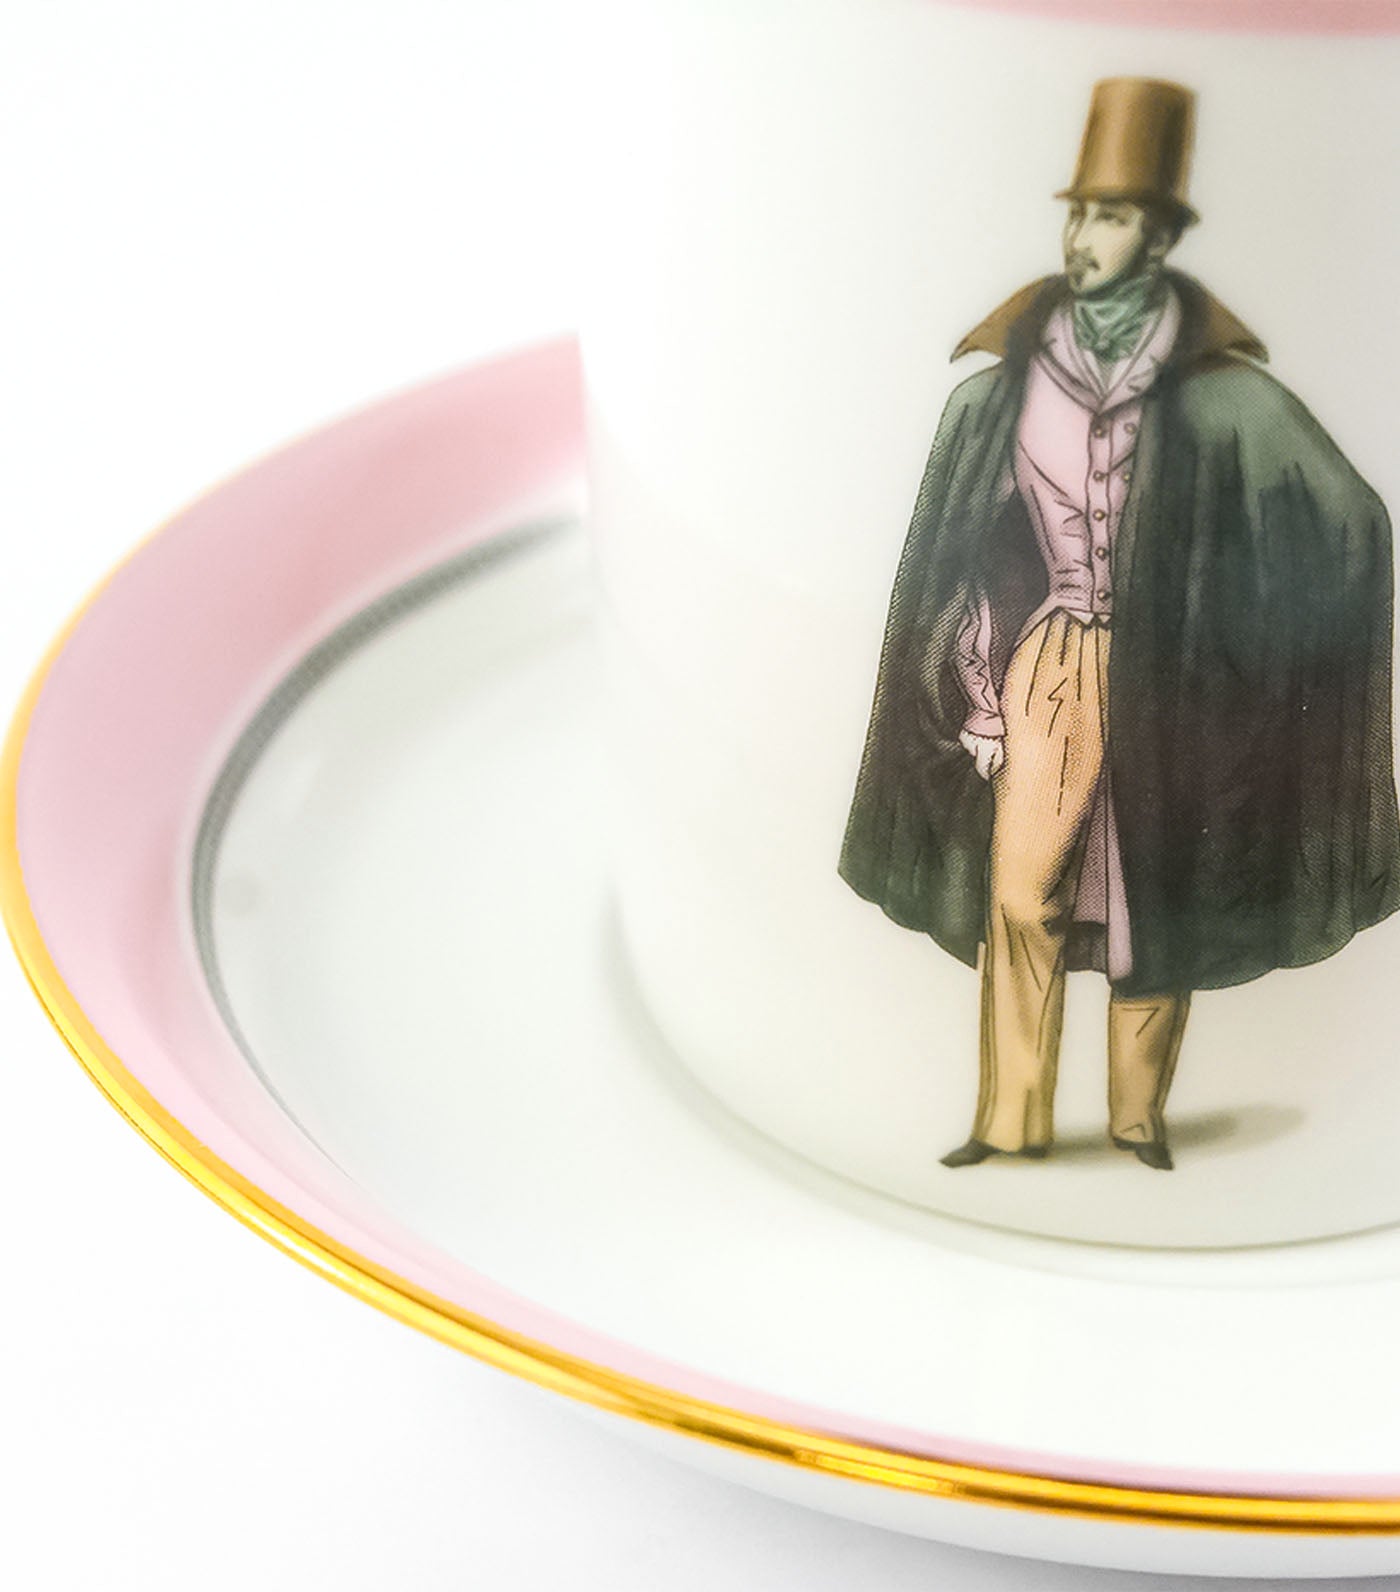 imperial porcelain modes de paris 1840 teacup and saucer heraldic